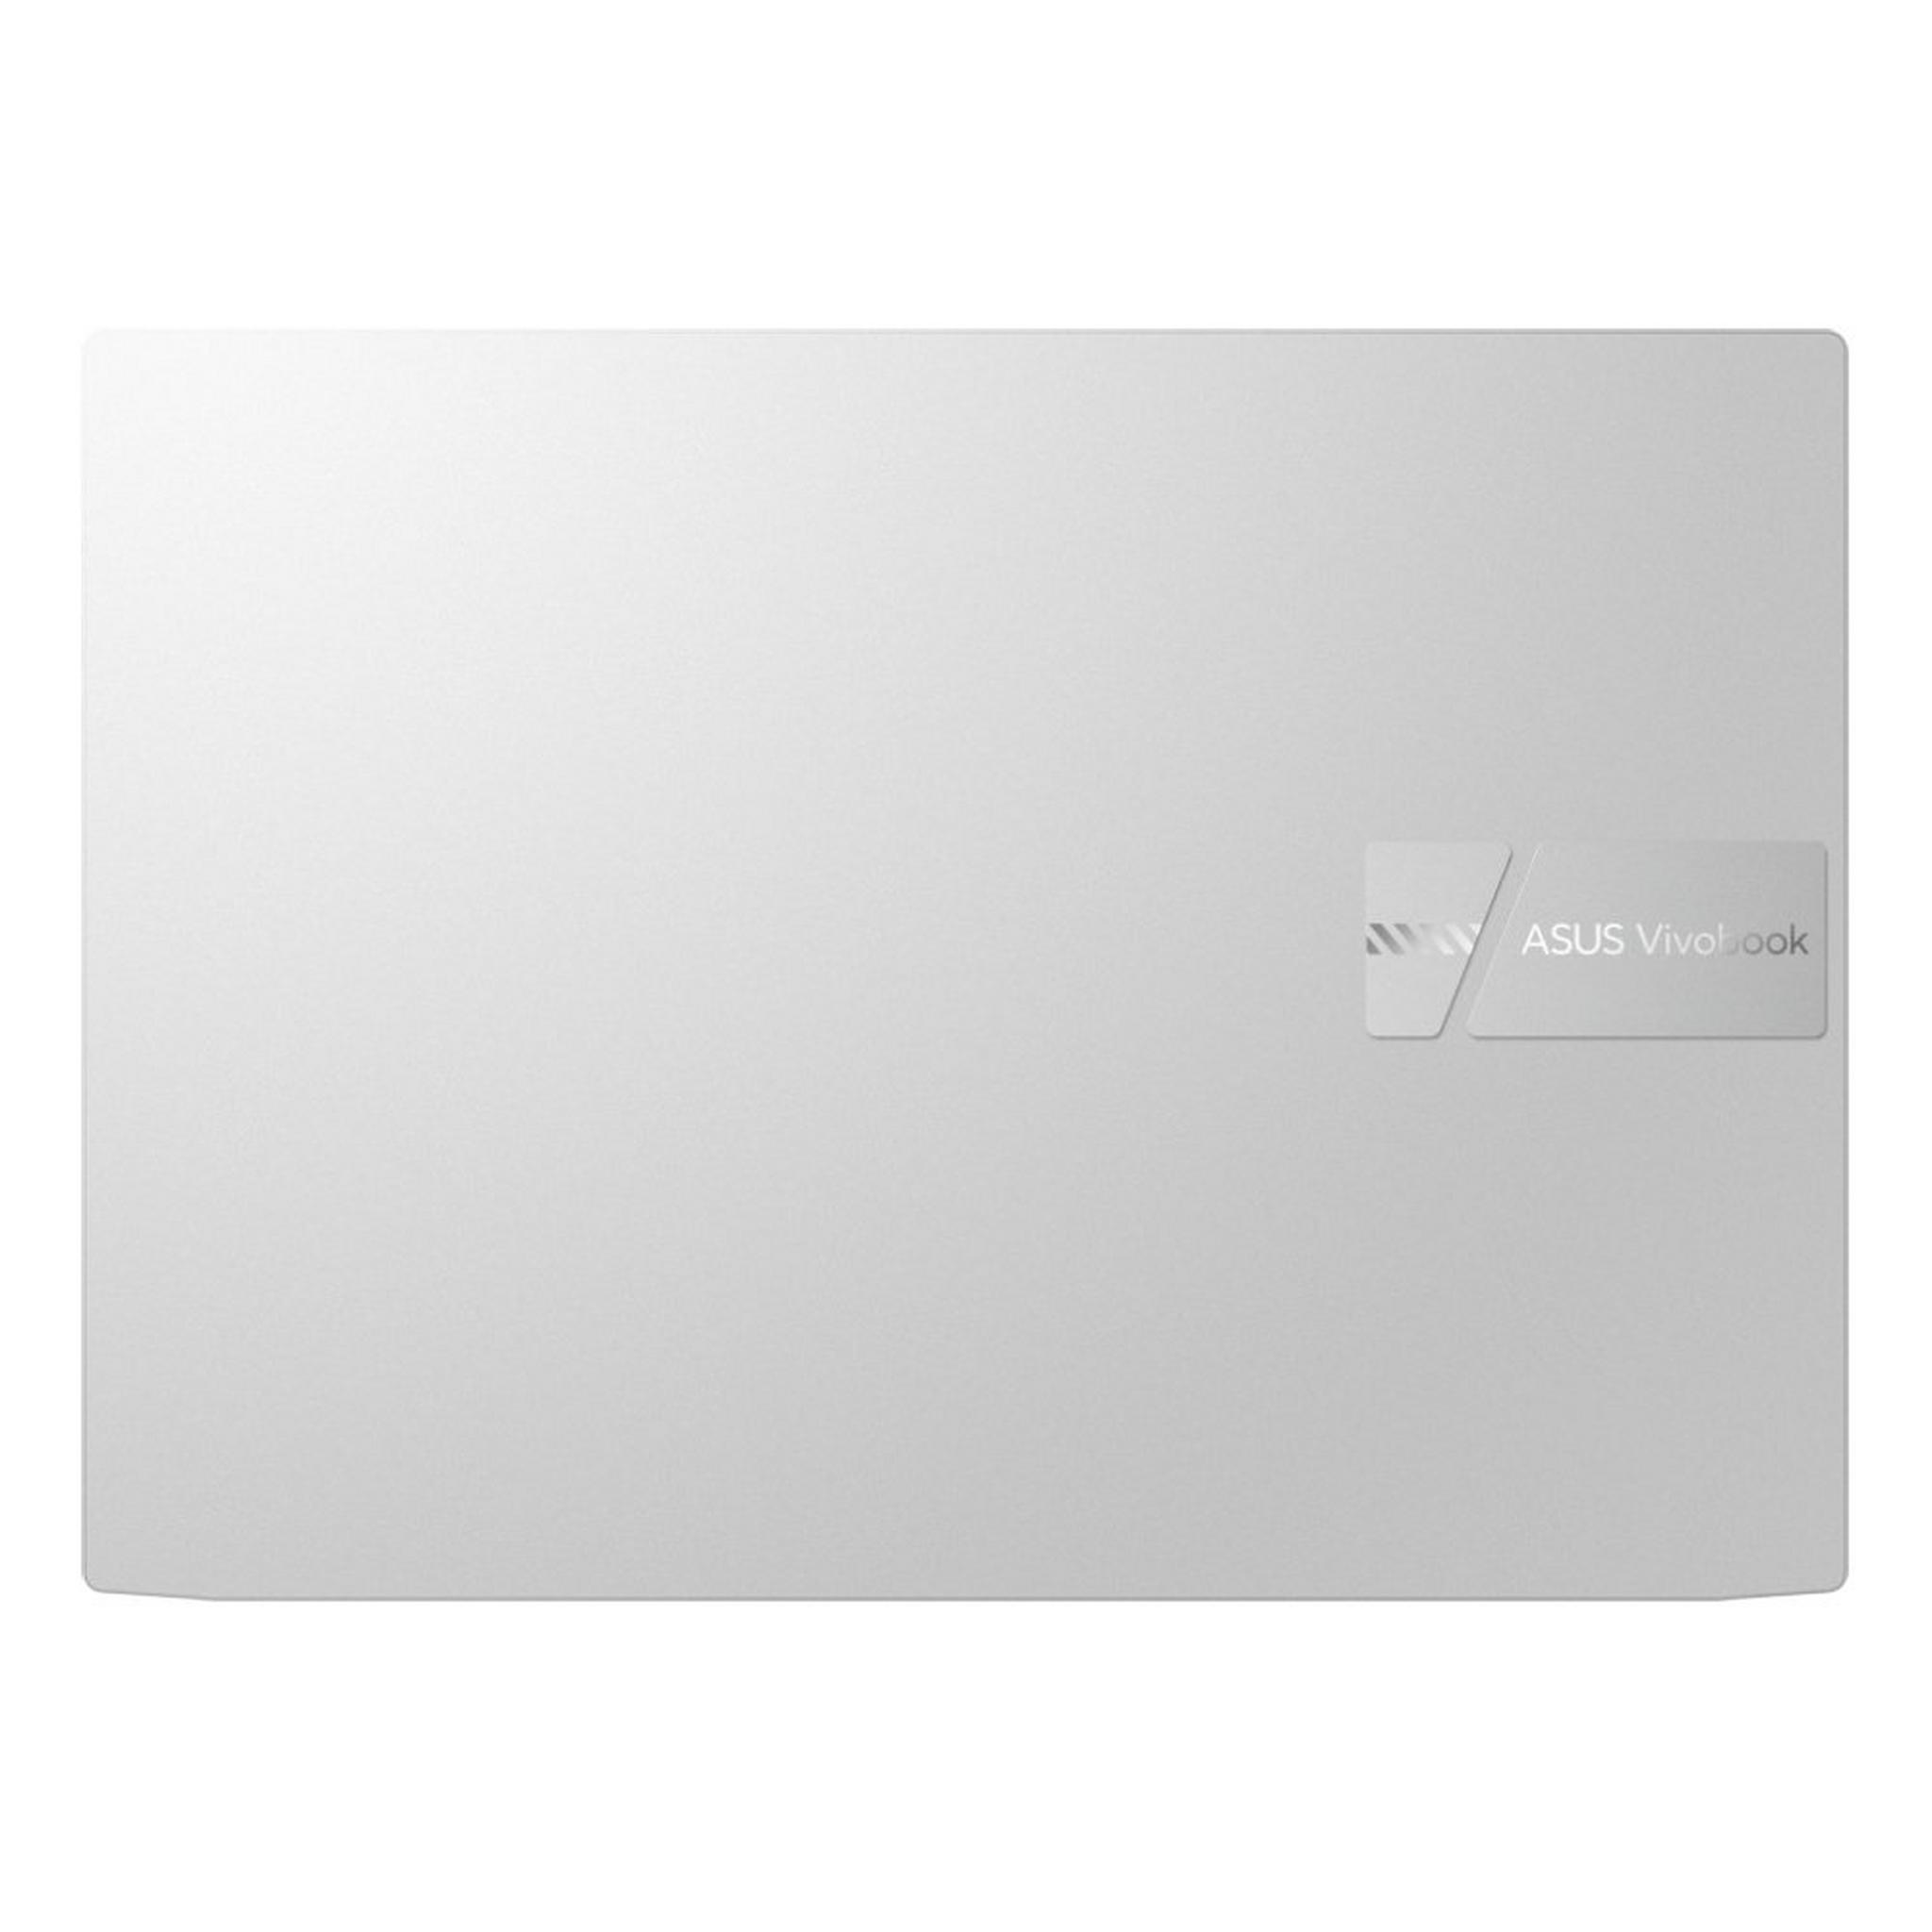 Asus Vivobook Pro 14 OLED Intel Core i7 11th Gen, 16GB RAM, 1TB SSD, 14-inch Laptop - Silver